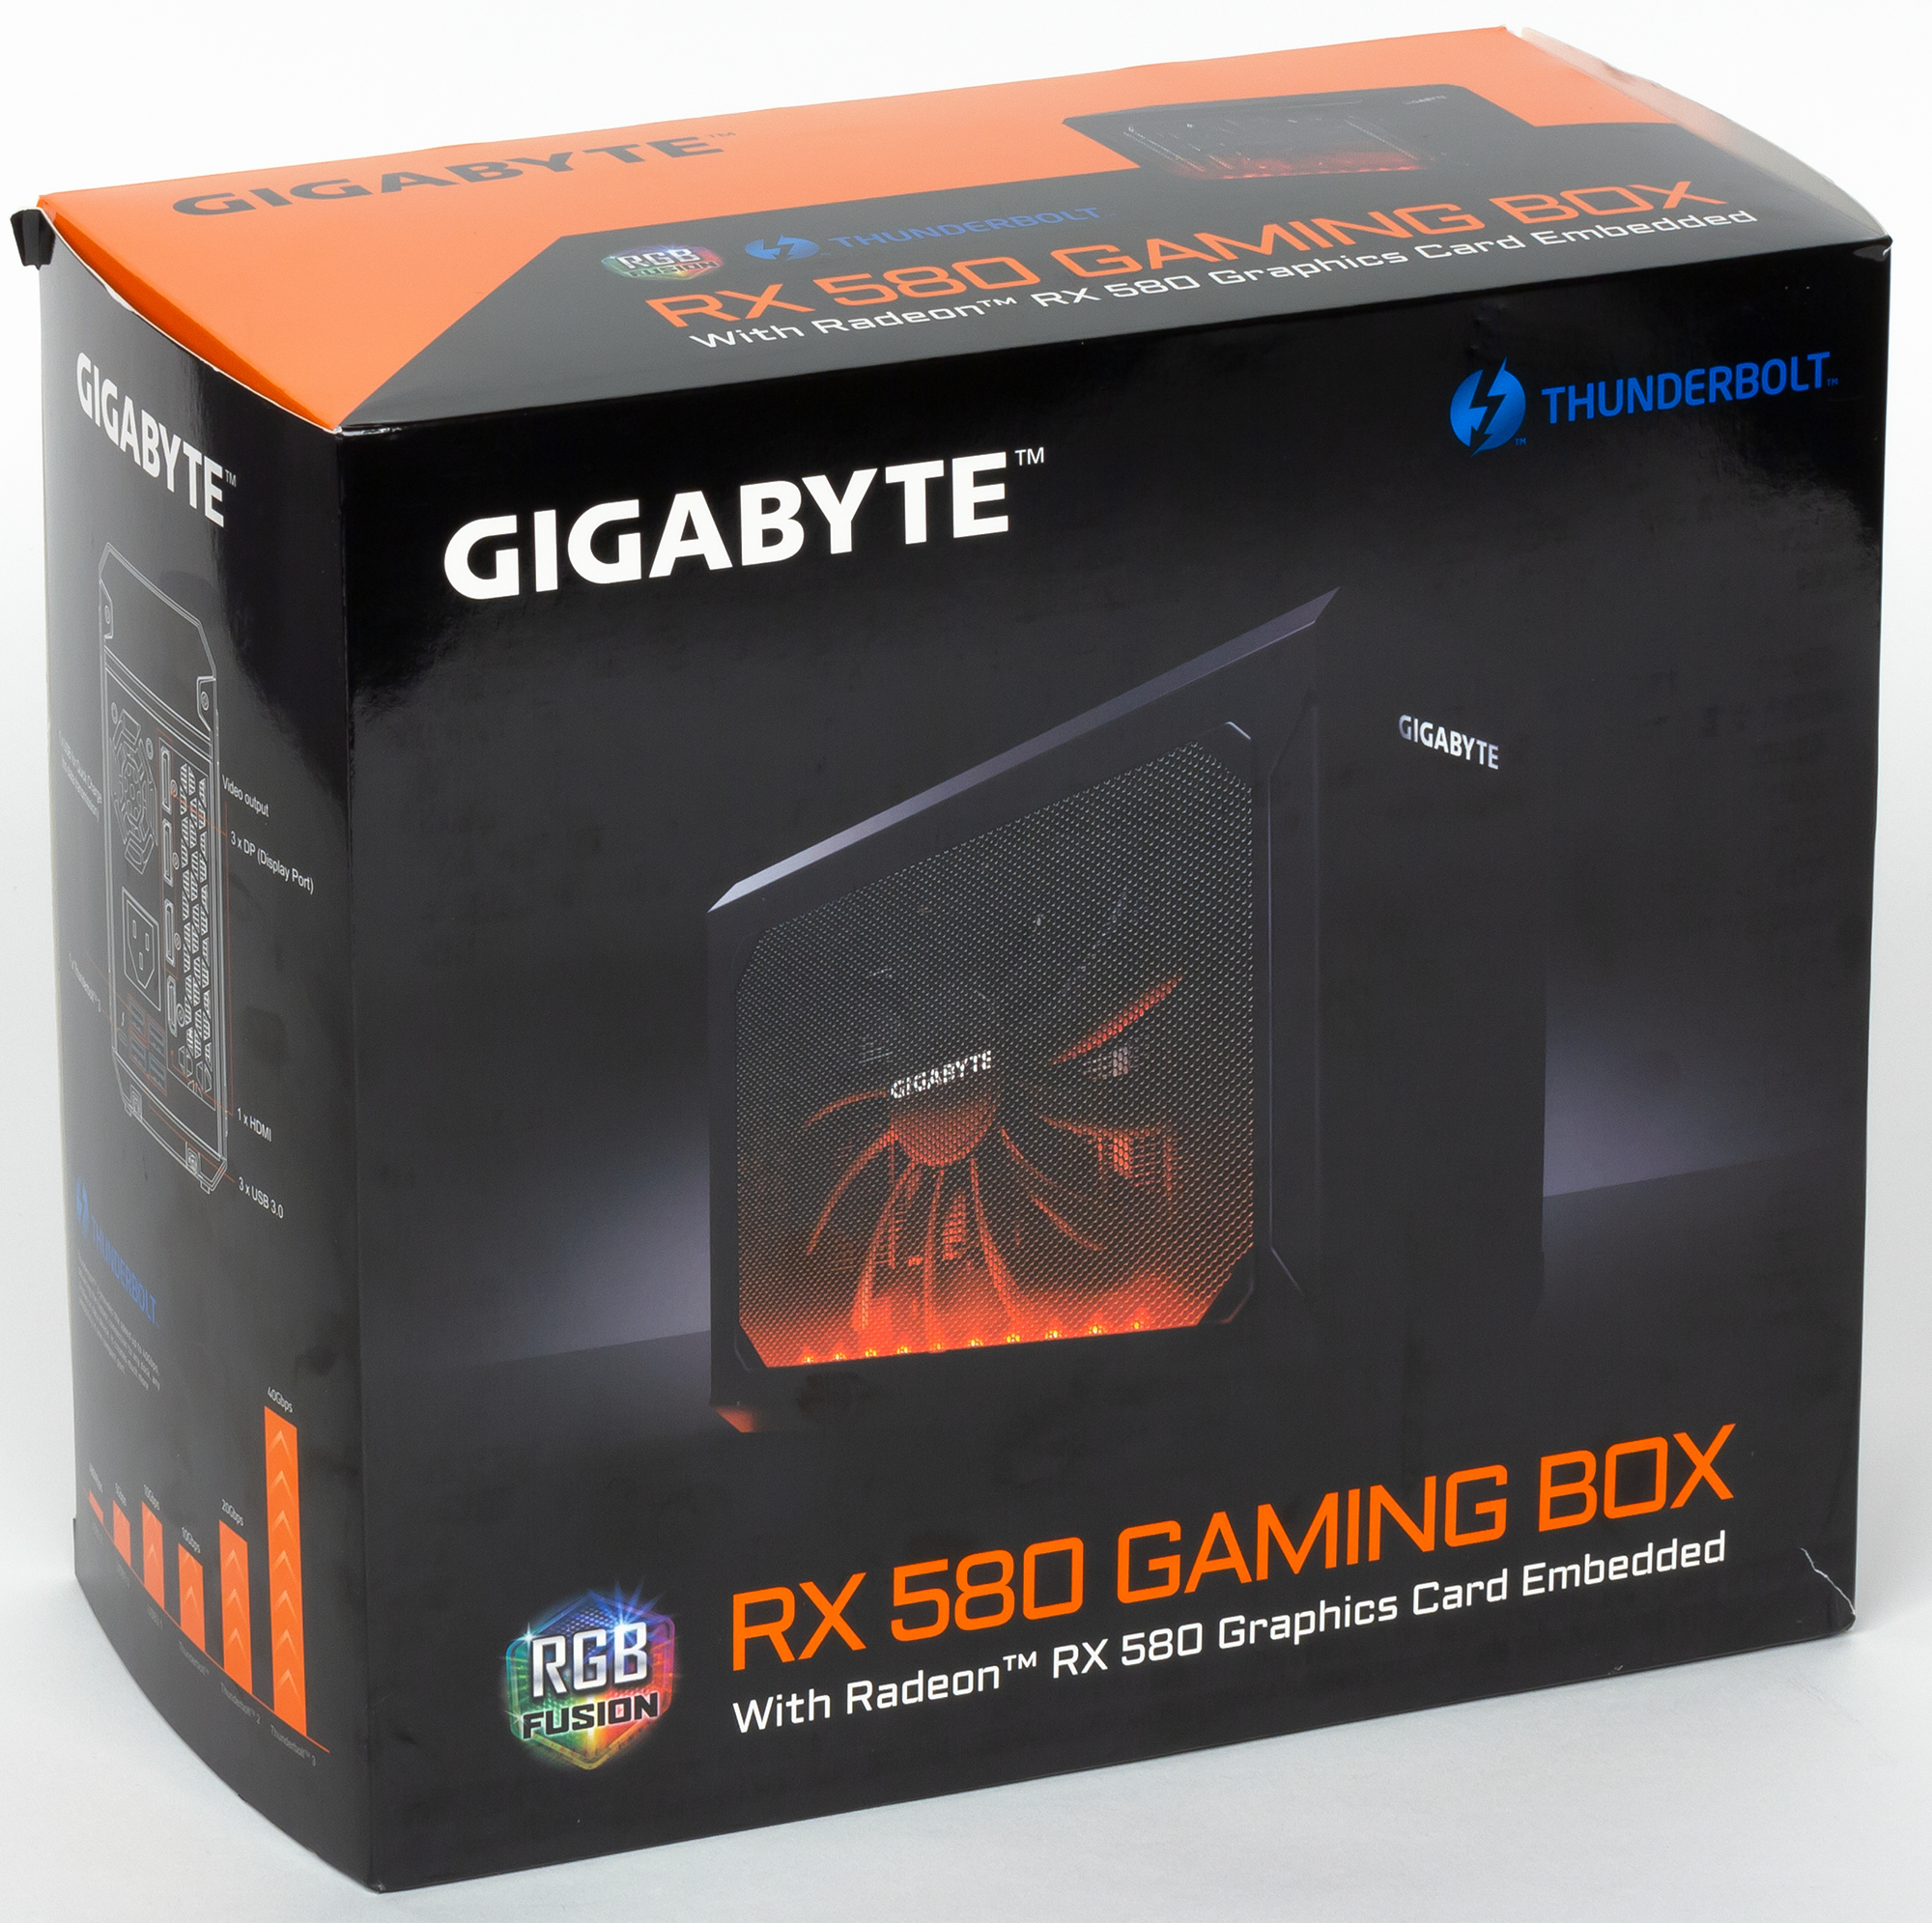 Gigabyte gaming box